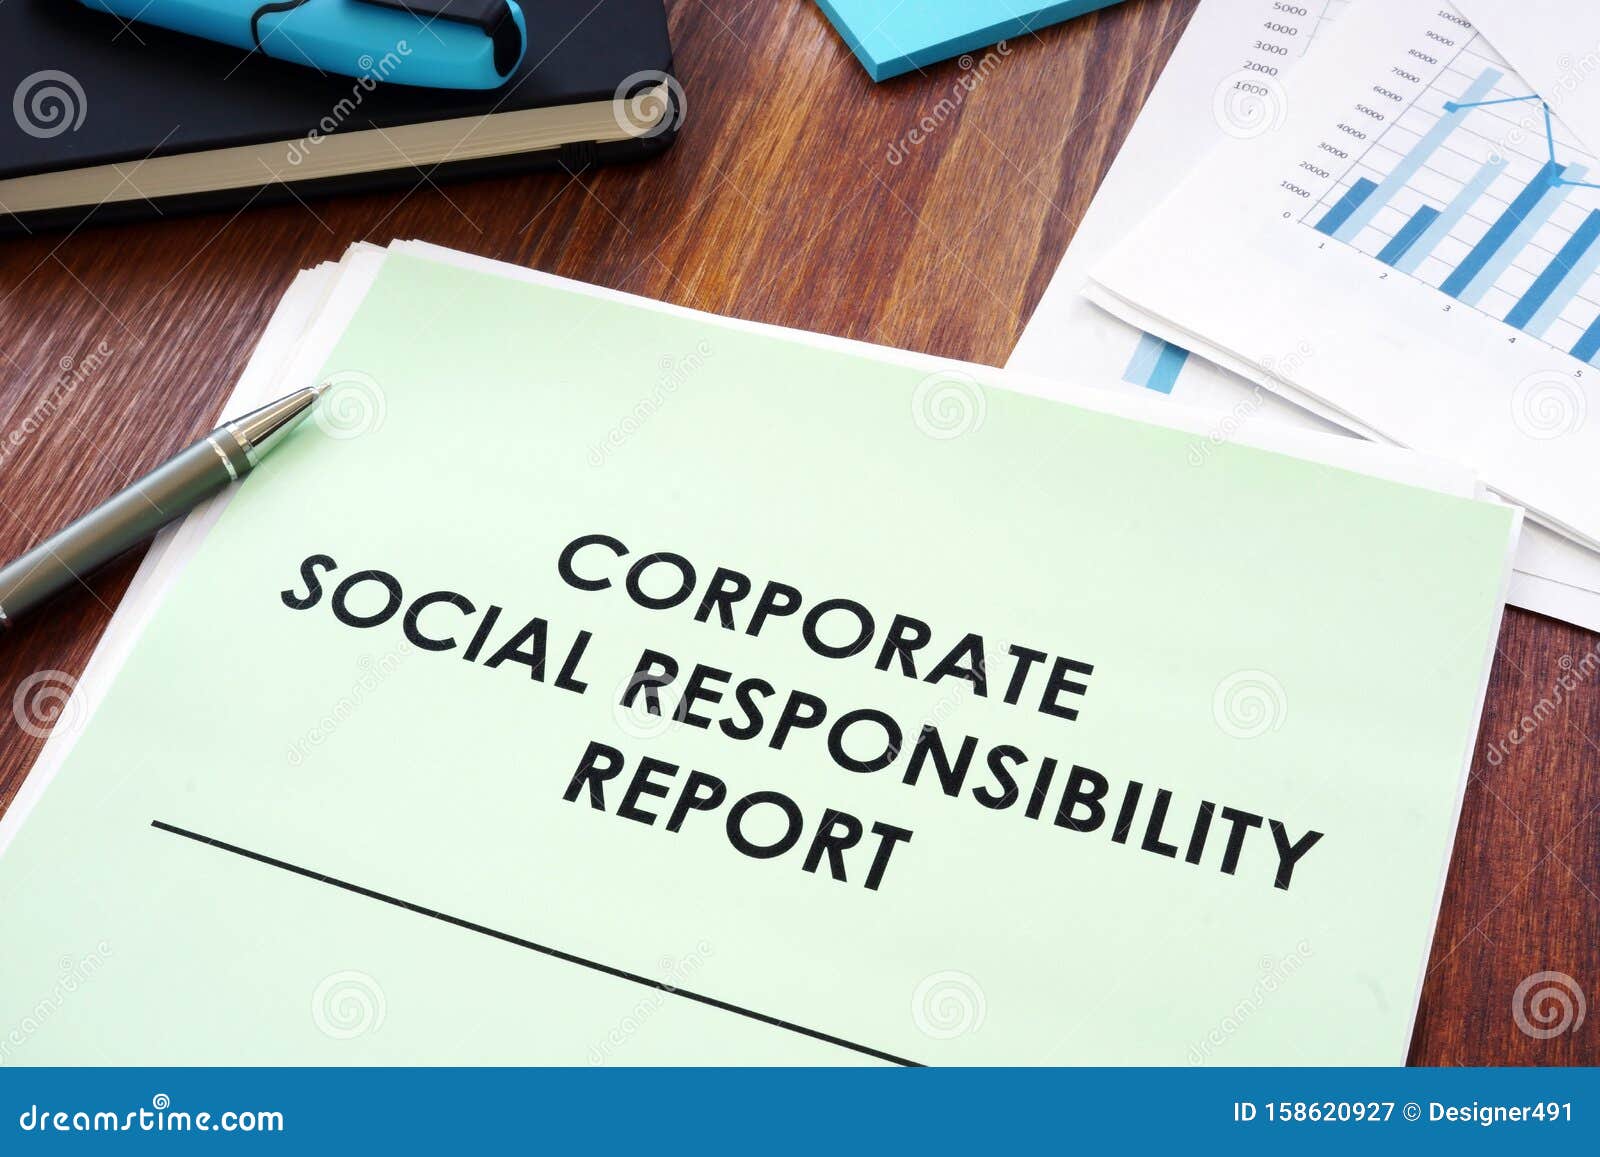 corporate social responsibility report.